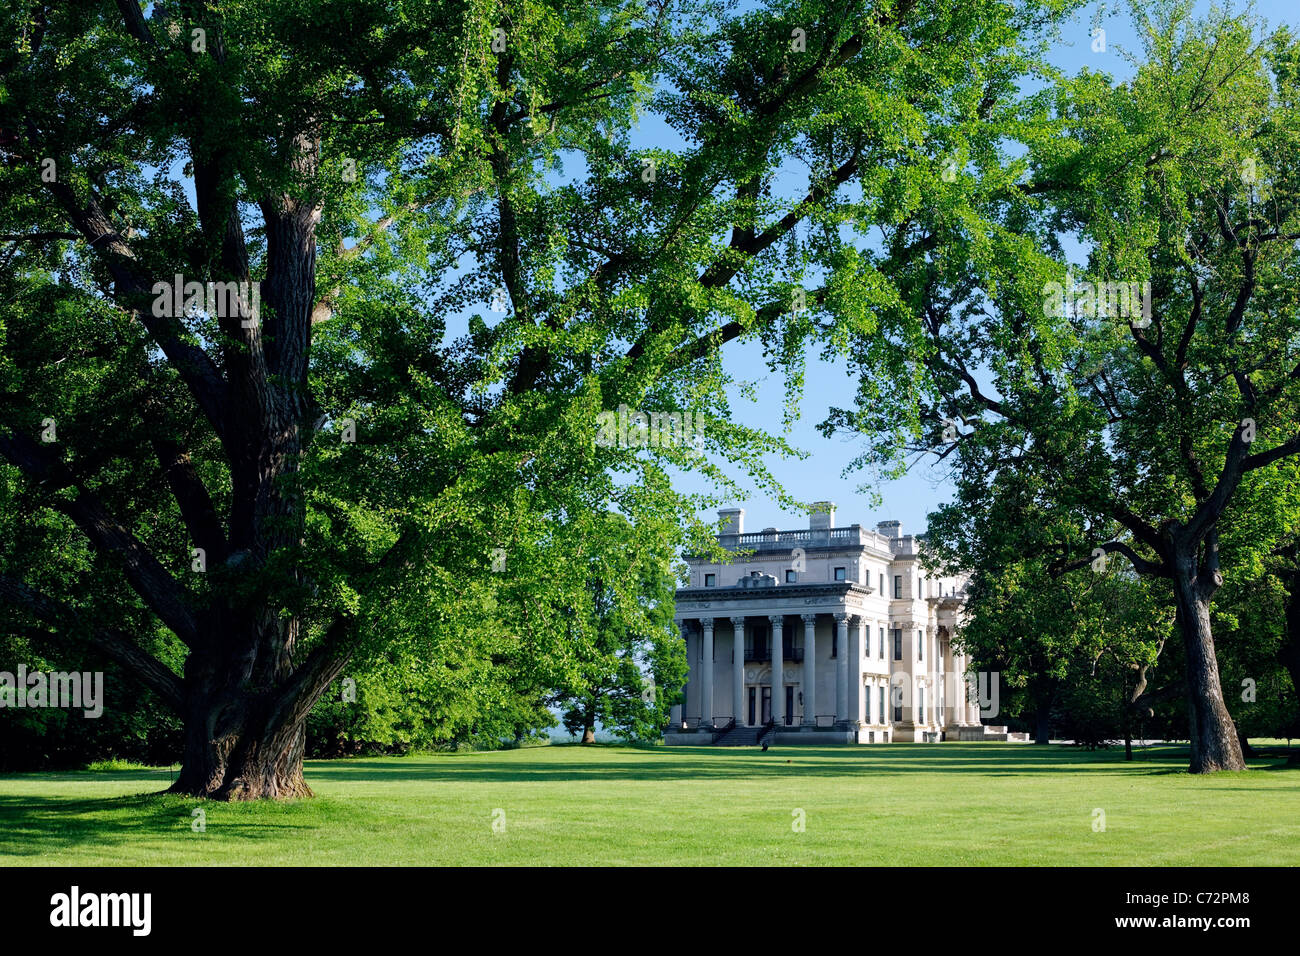 Vanderbilt Mansion and grounds, Vanderbilt Mansion National Historic Site, Hyde Park, Dutchess County, New York, USA Stock Photo